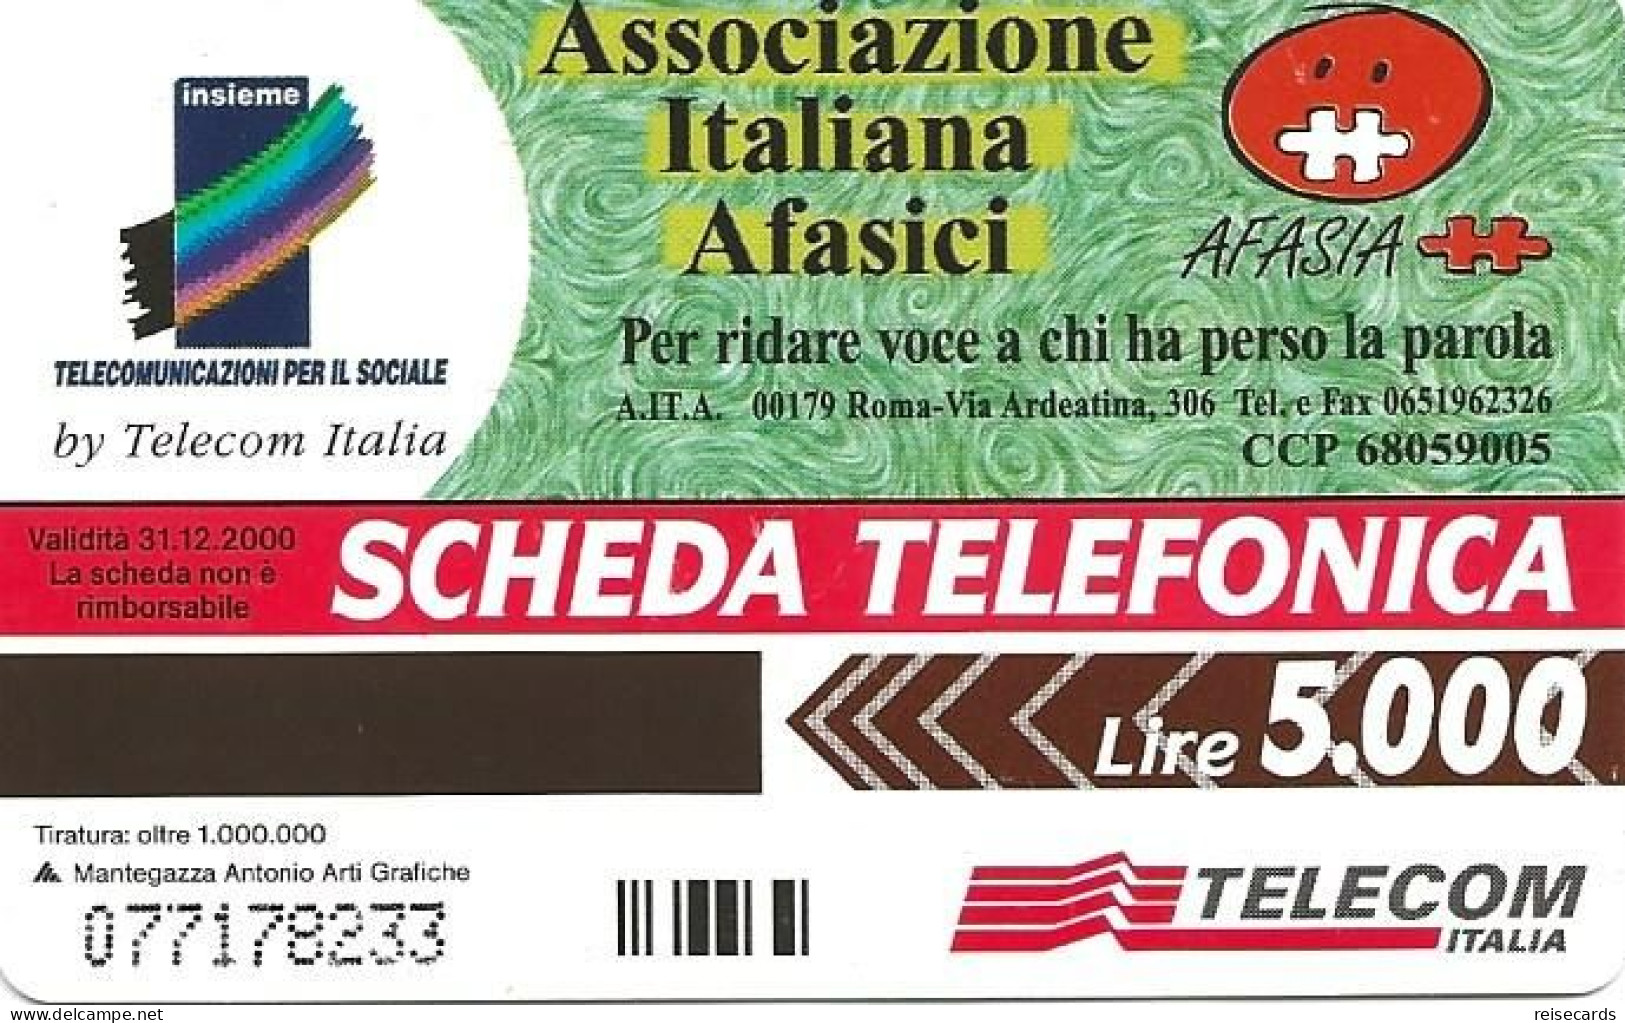 Italy: Telecom Italia - Associazione Italiana Afasici - Öff. Werbe-TK